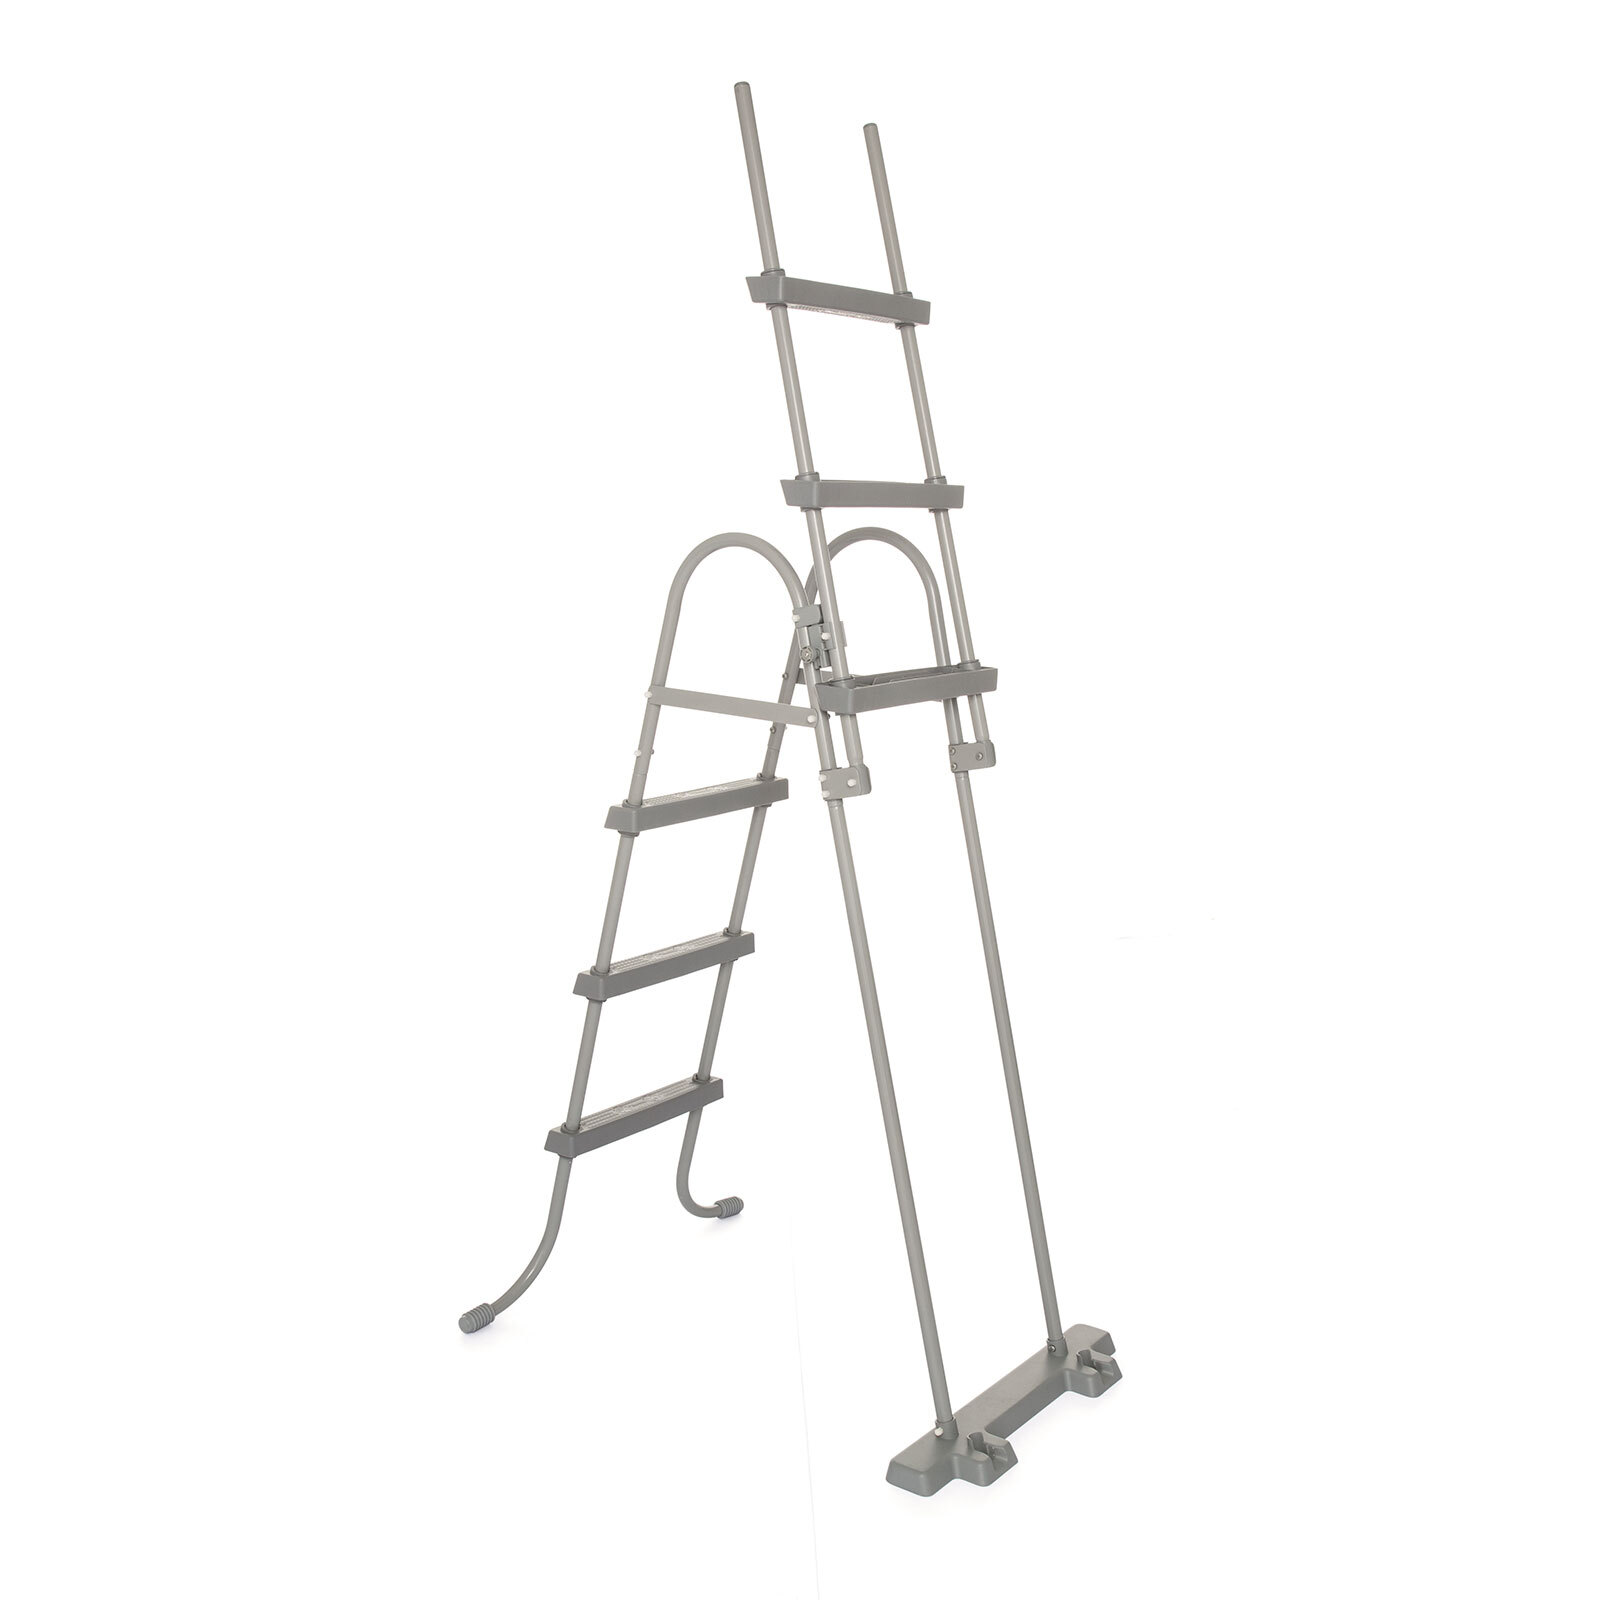 Intex Steel Frame Above Ground Swimming Pool Ladder Pool Ladder Step Pad 